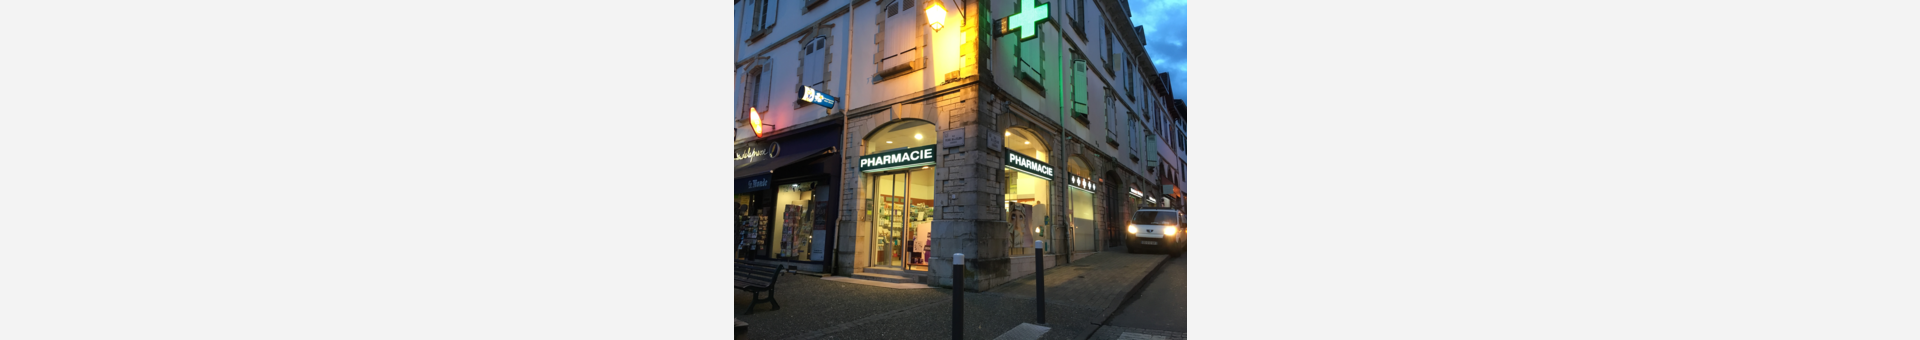 Pharmacie Lamerenx,Hasparren